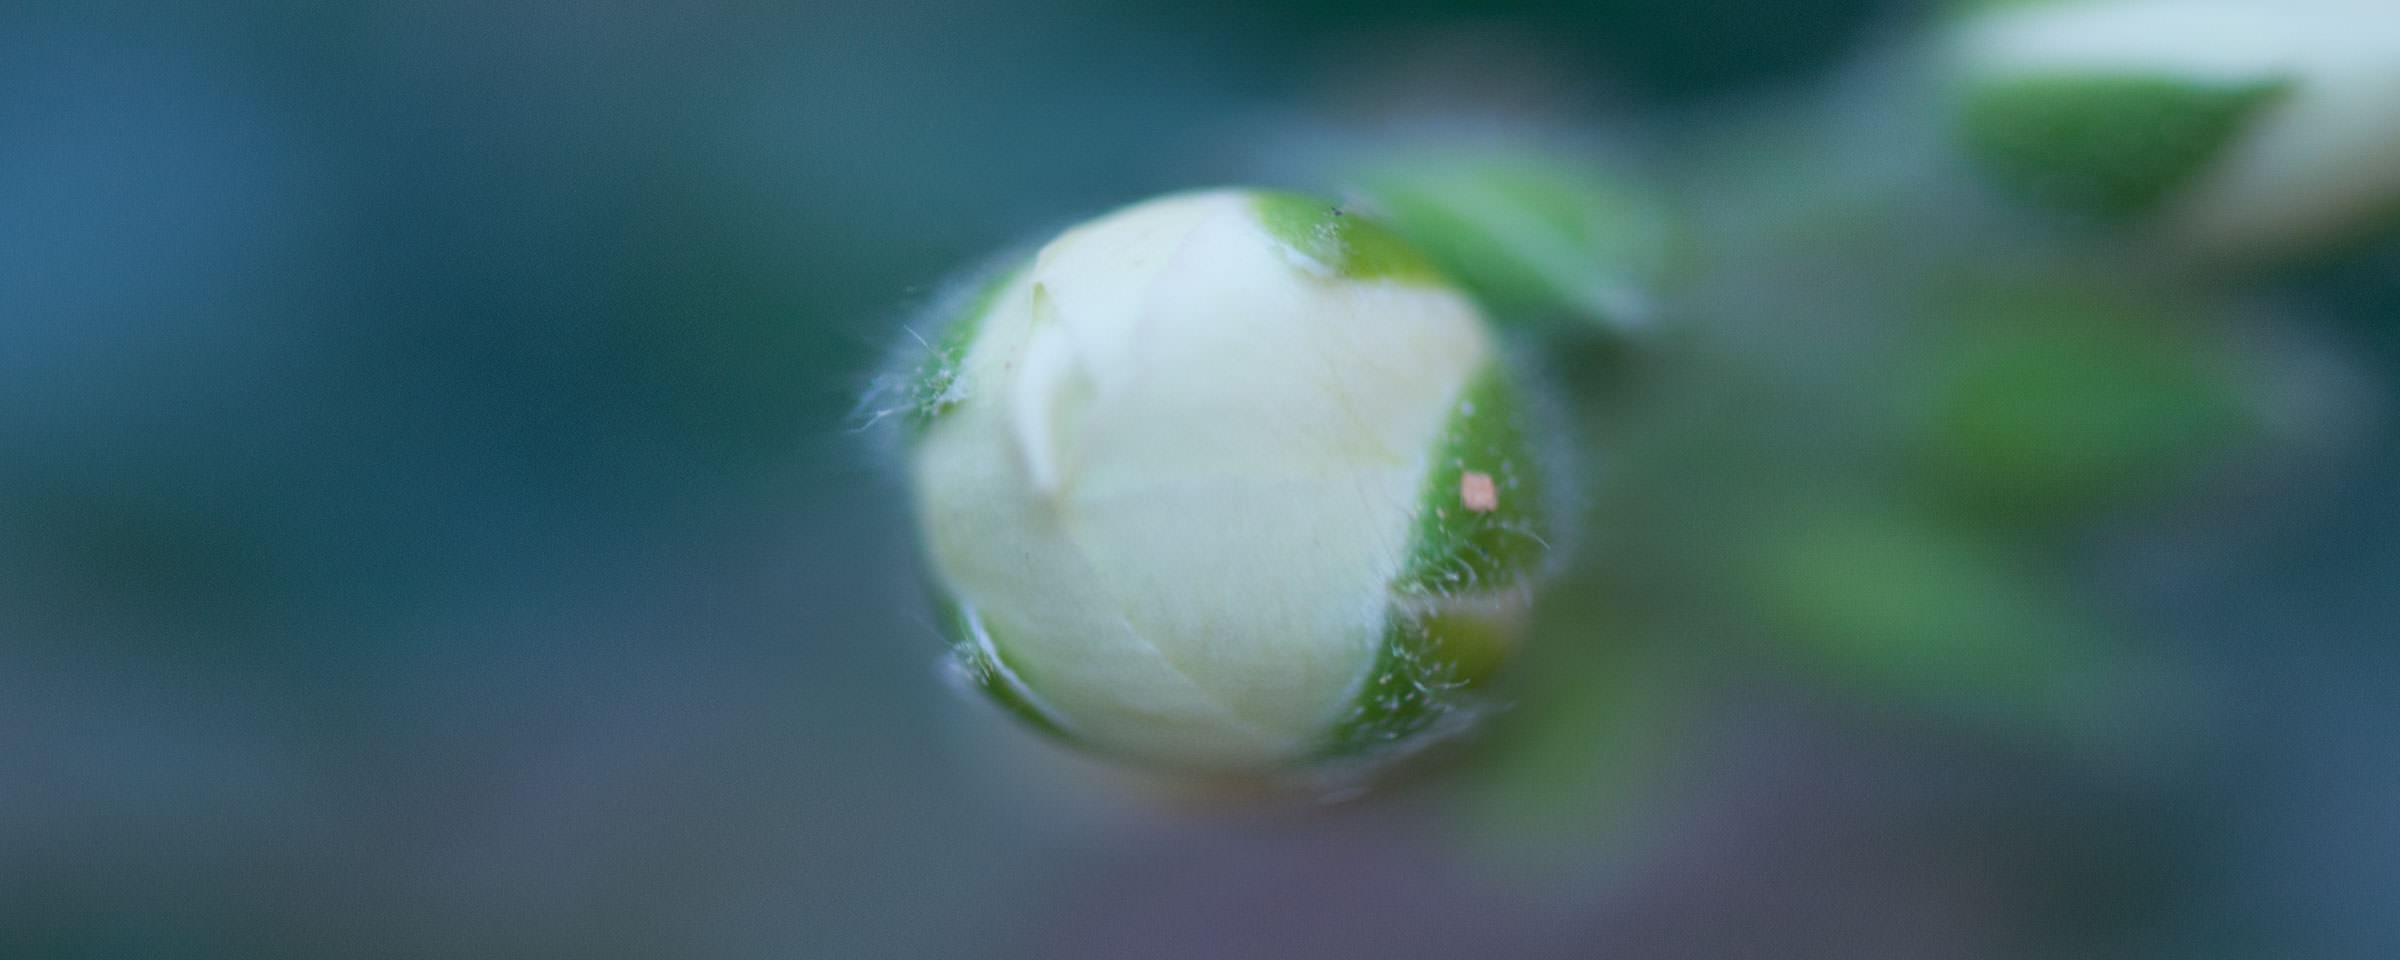 Rose Flower Bud Close Up